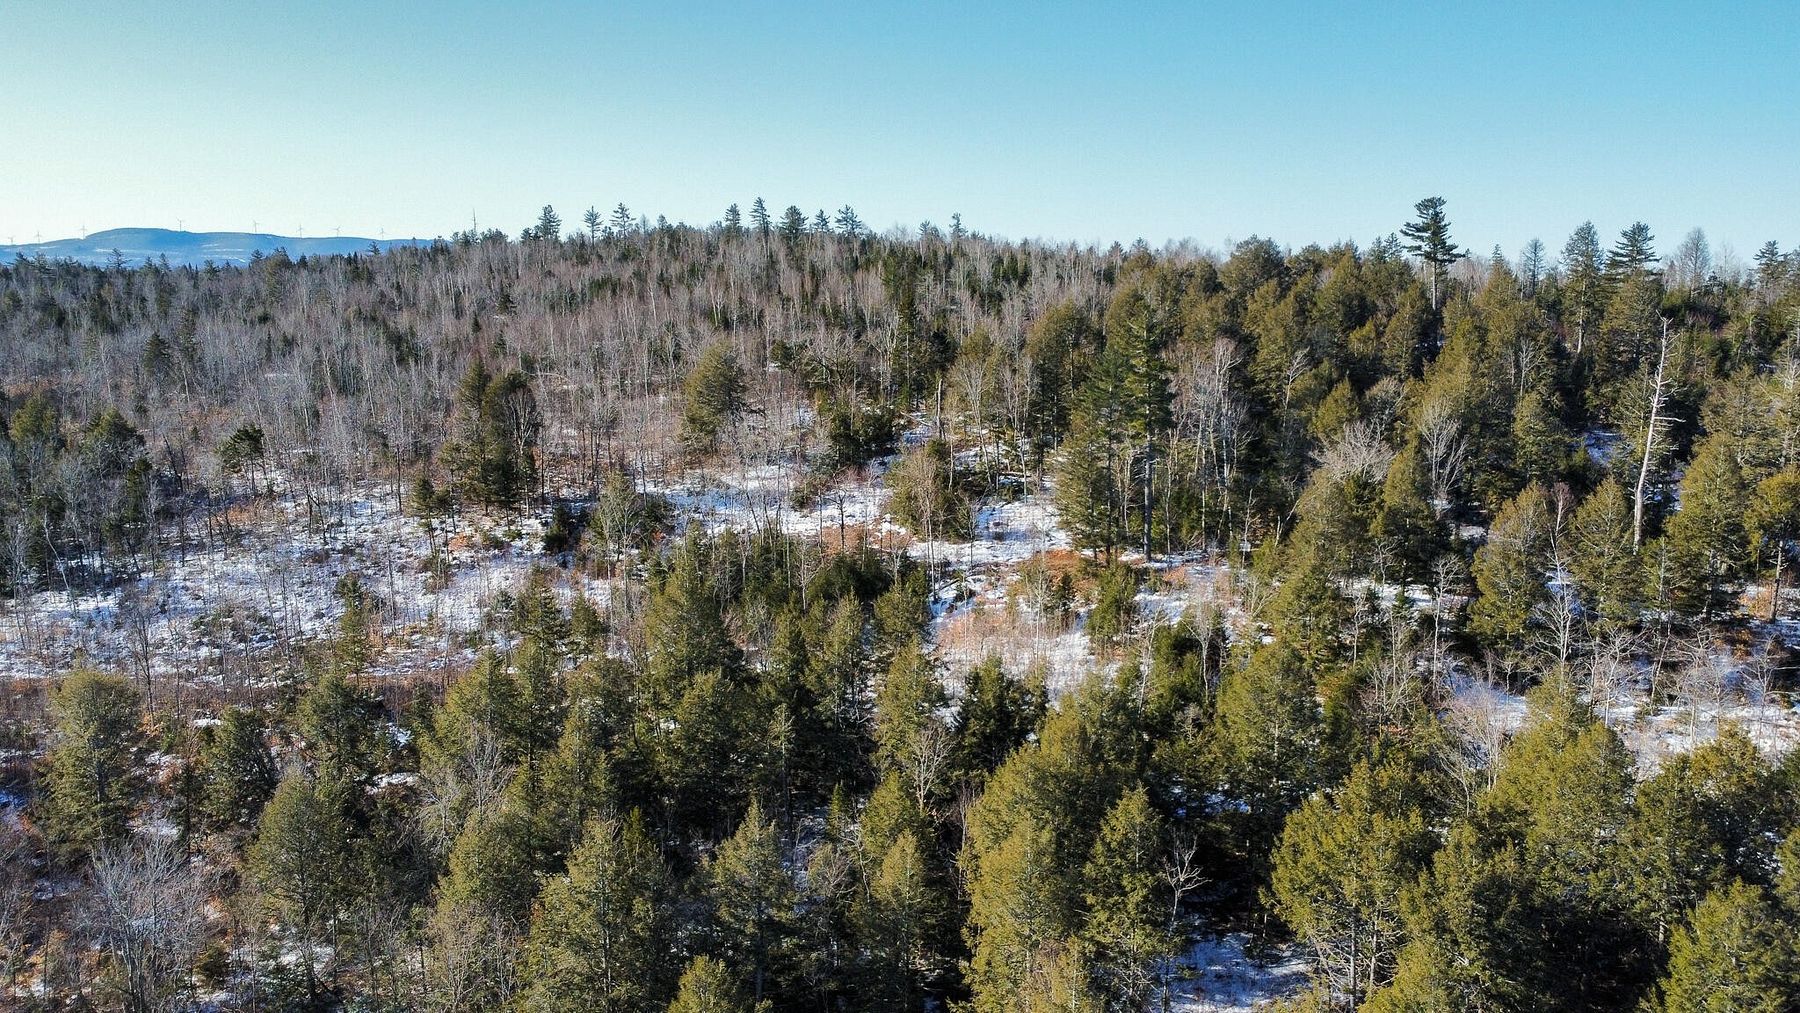 173 Acres of Mixed-Use Land Burlington, Maine, ME